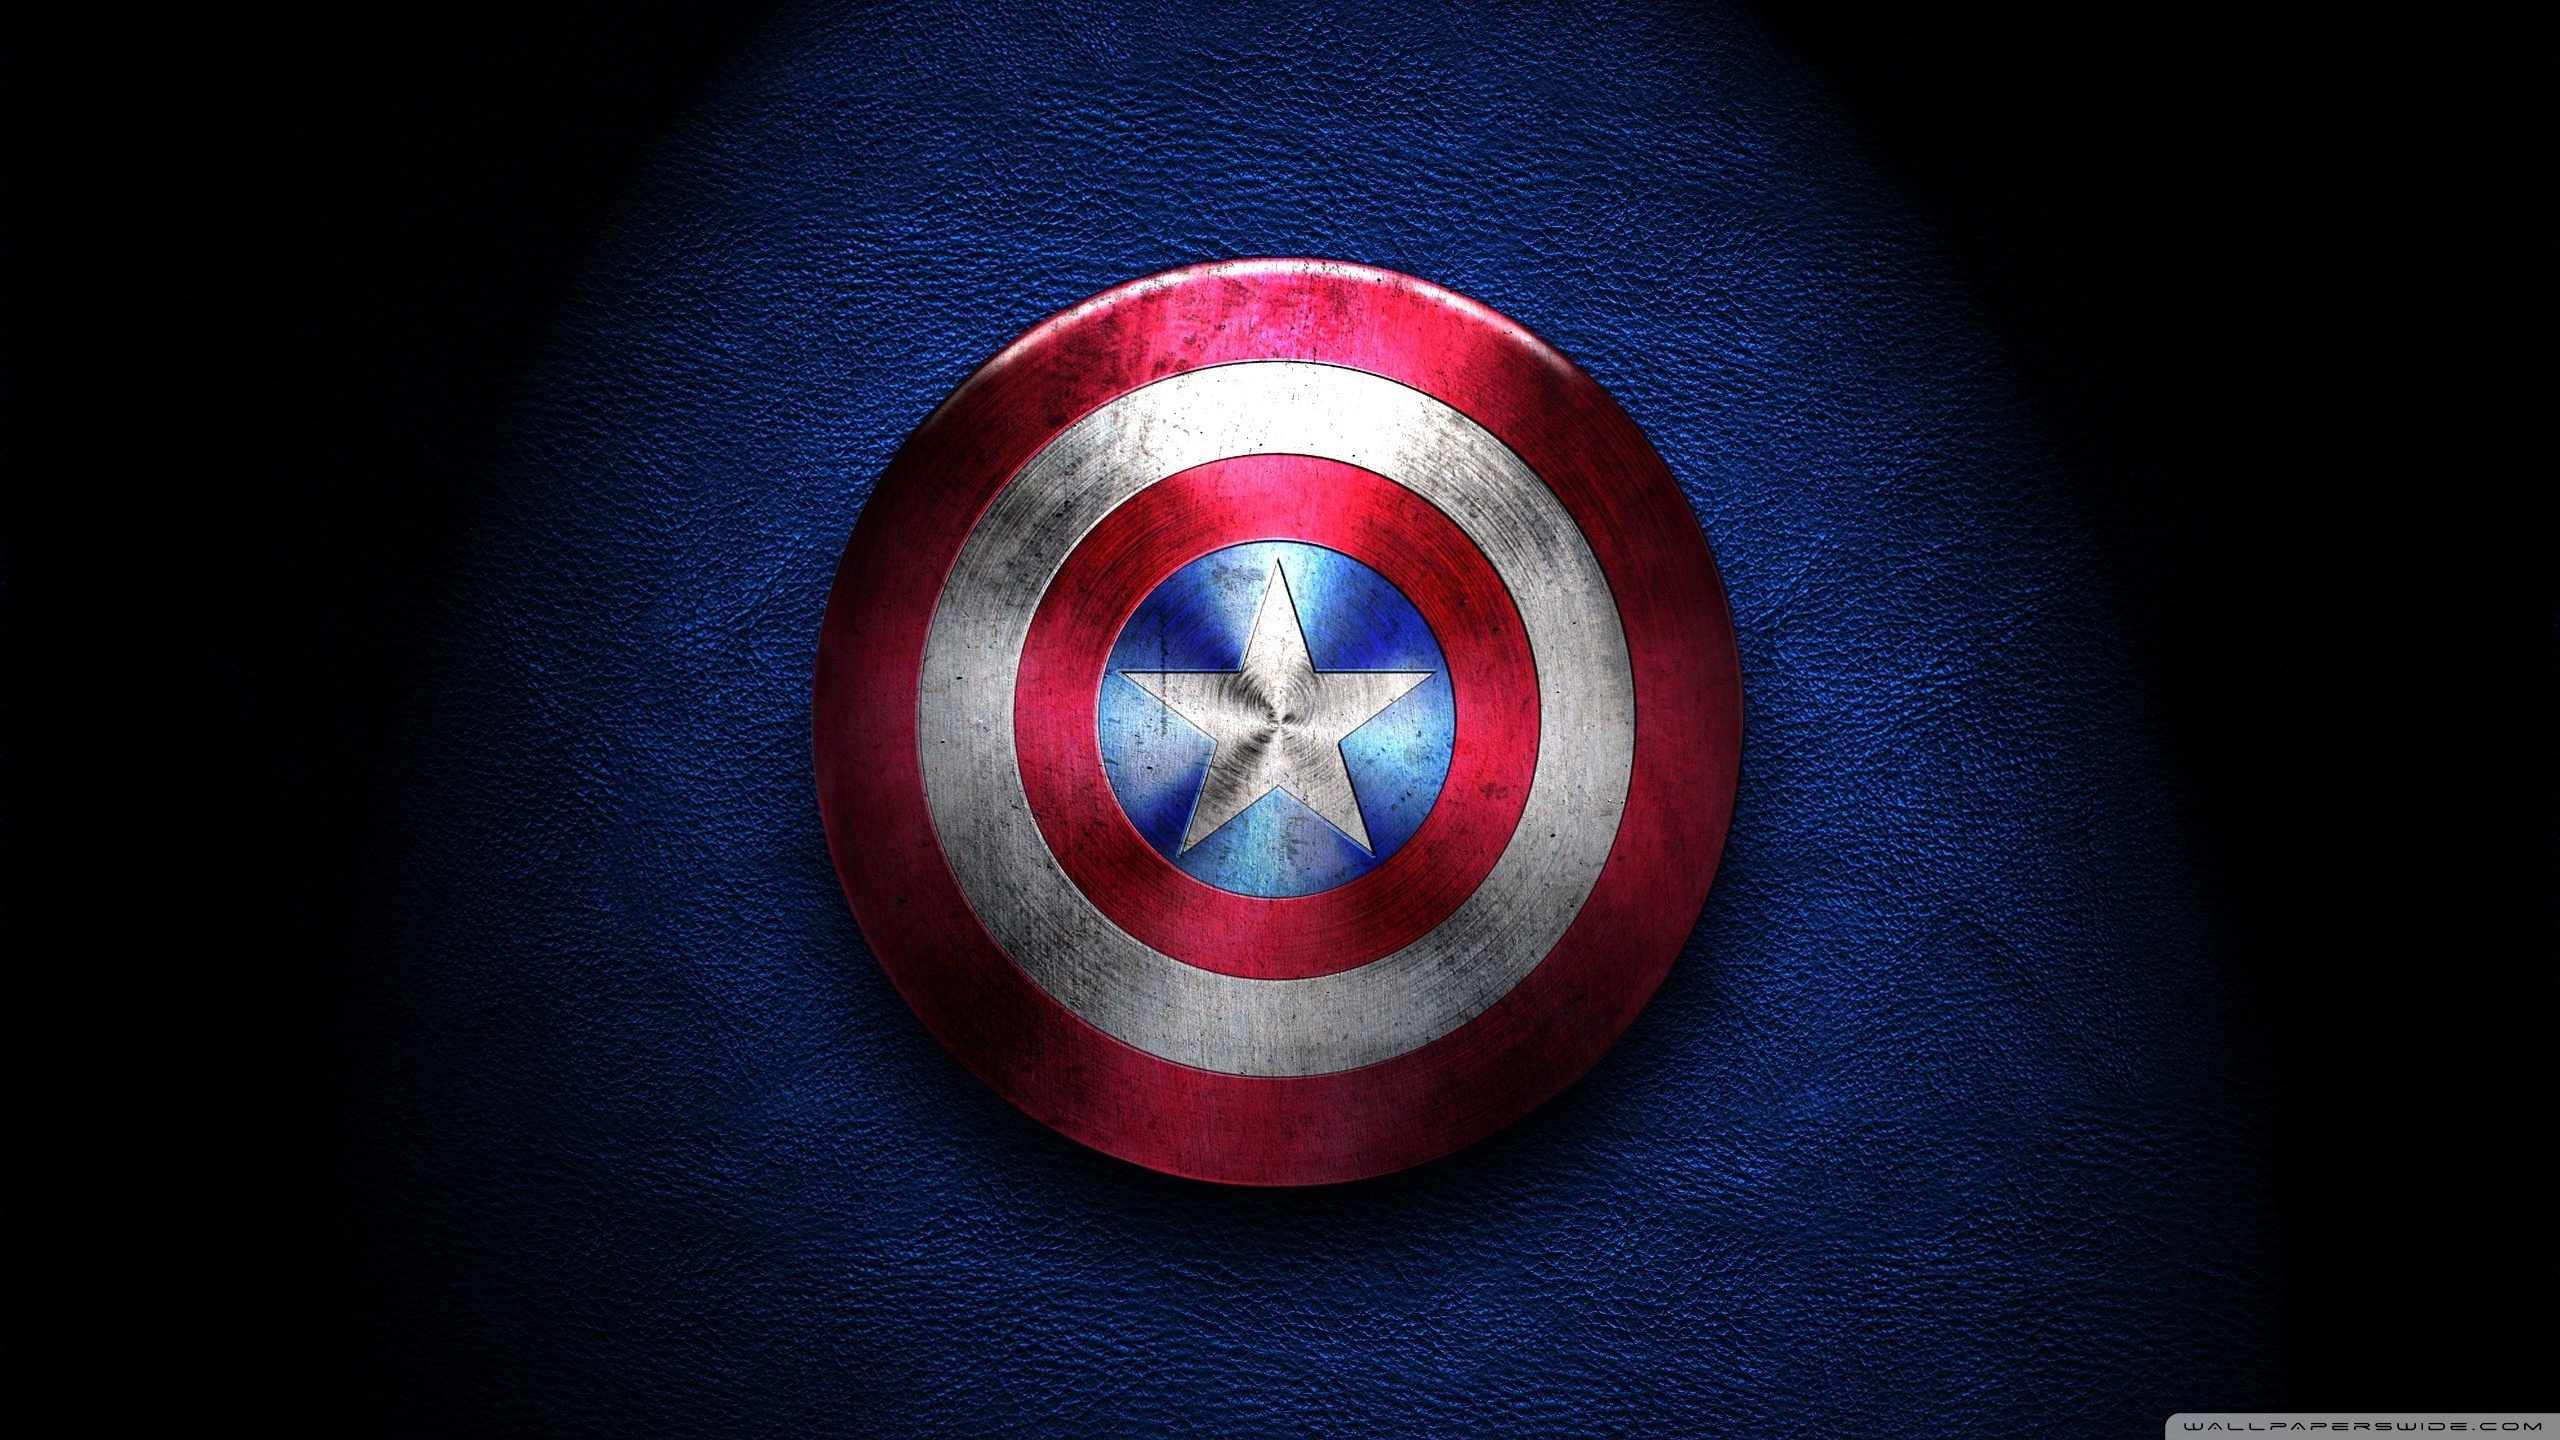 Captain America Shield Ultra Hd Desktop Background Wallpaper For 4k Uhd Tv Tablet Smartphone